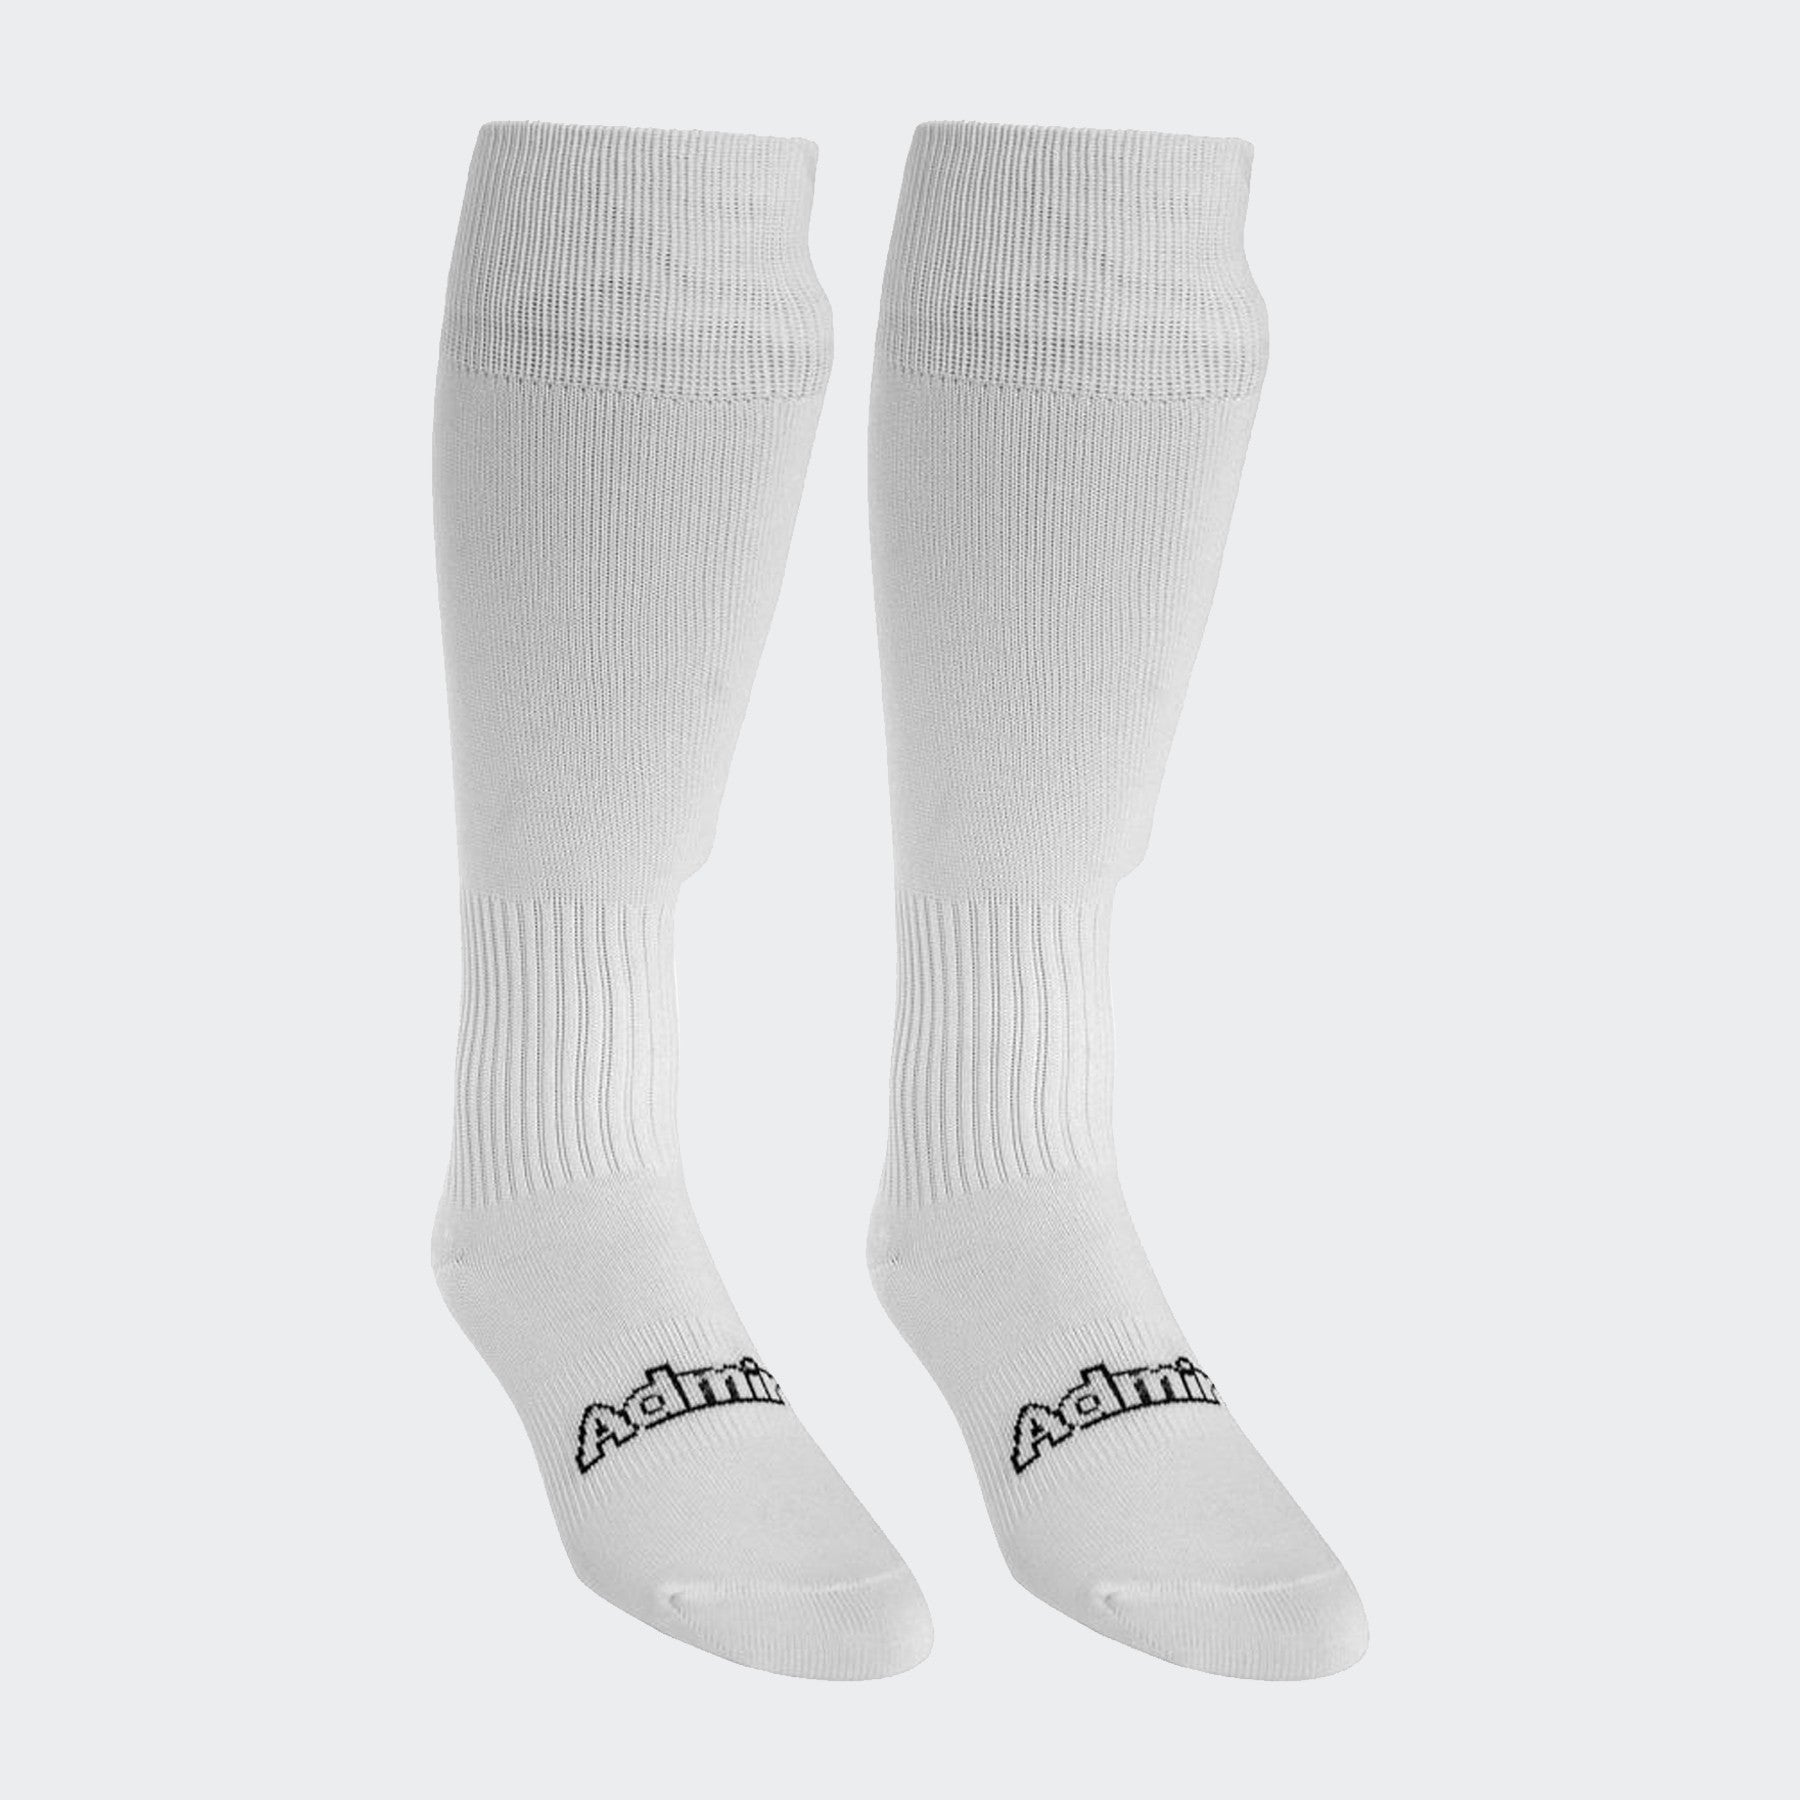 Tourney II Socks - White/Black